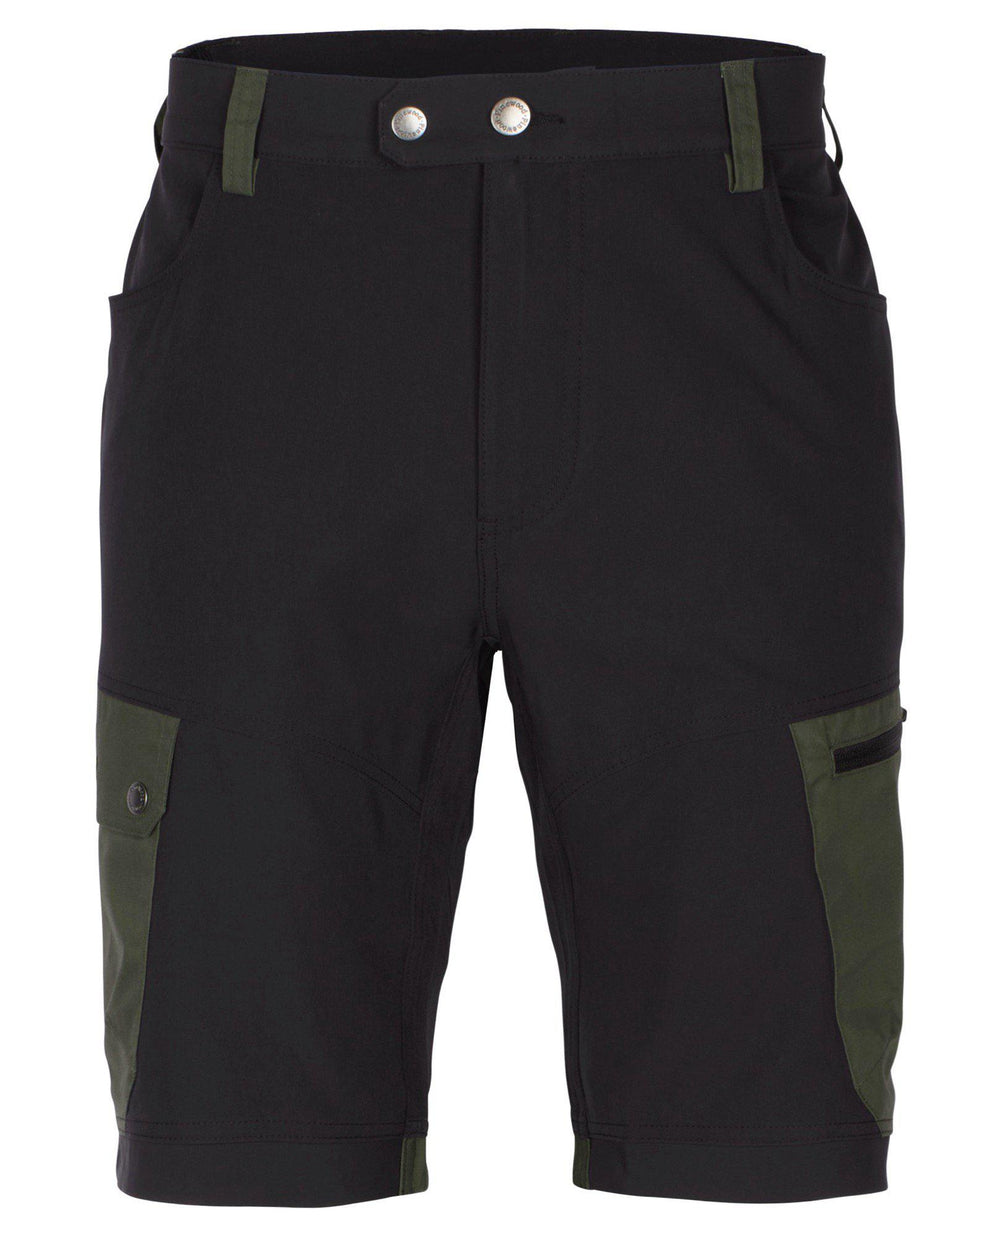 5316-462-01_Finnveden-Trail-Hybrid-Shorts-Mens_Black-MossGreen